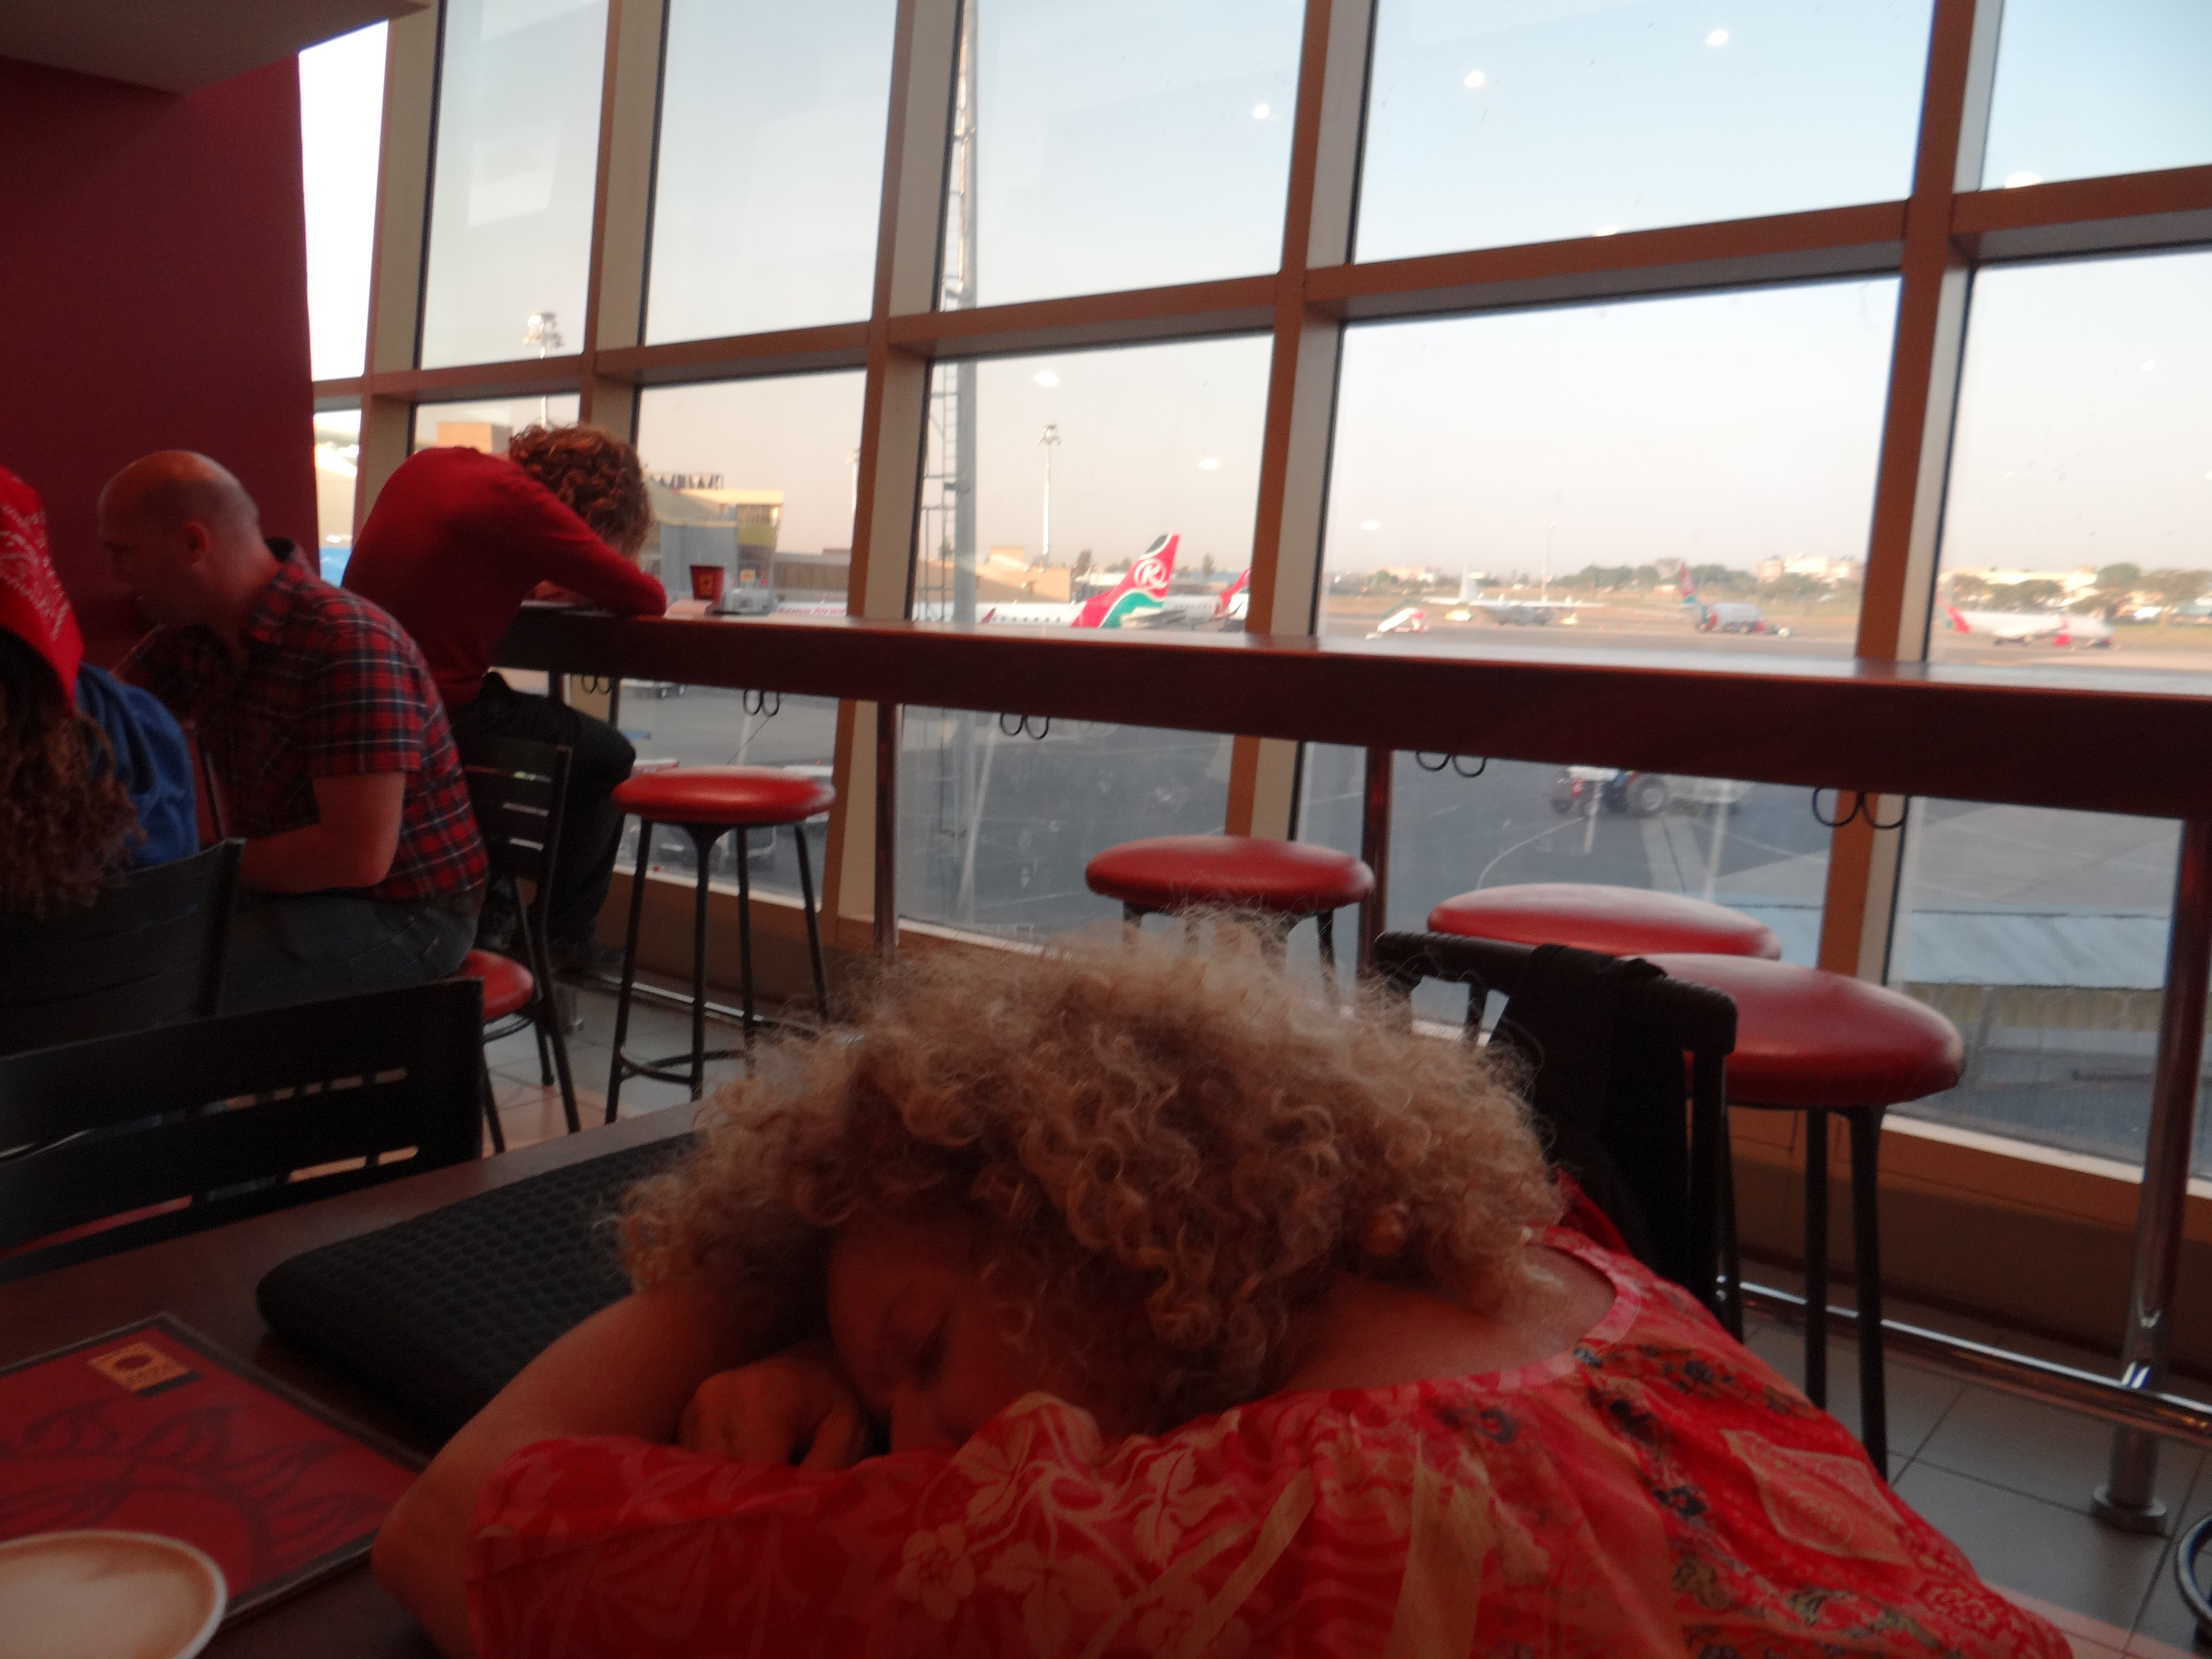 sleeping at the airport